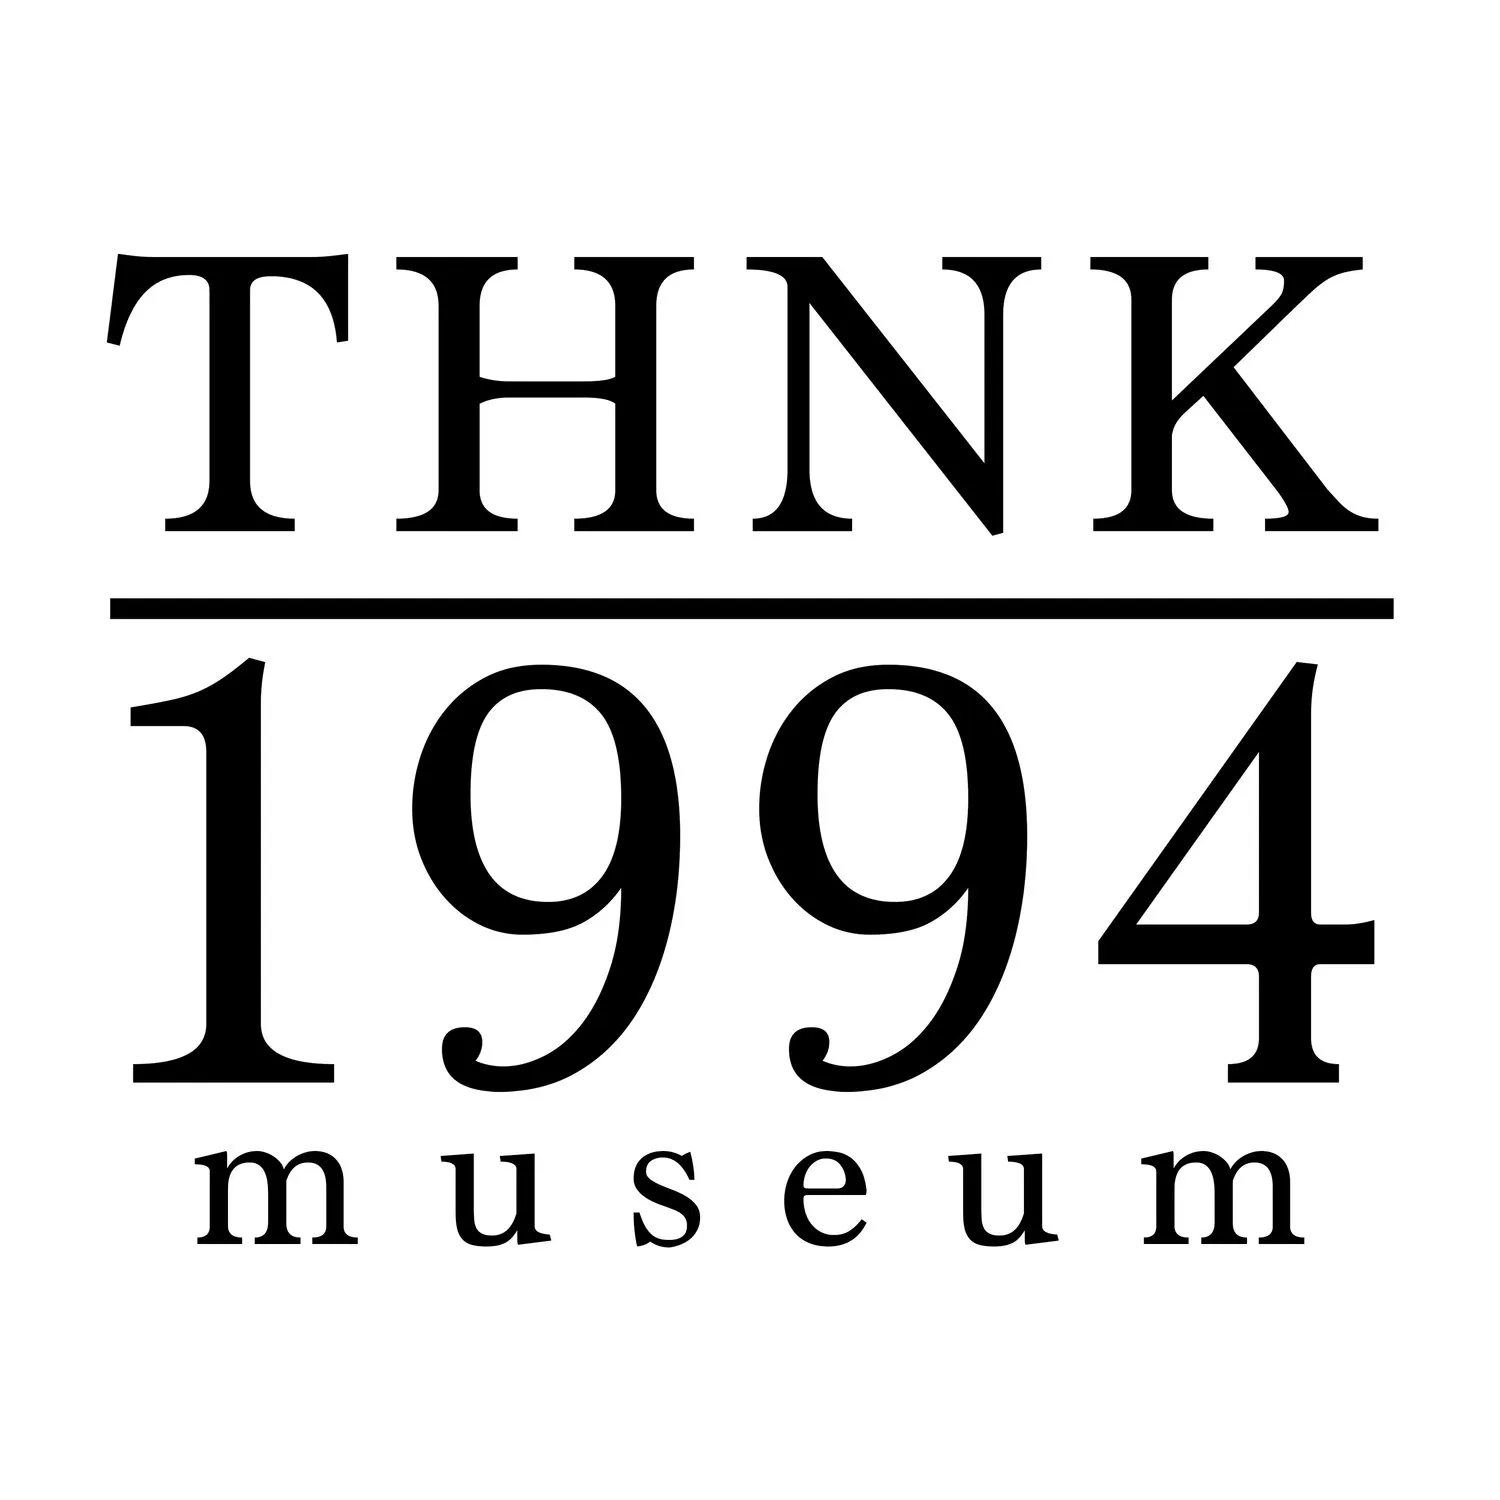 Thnk1994